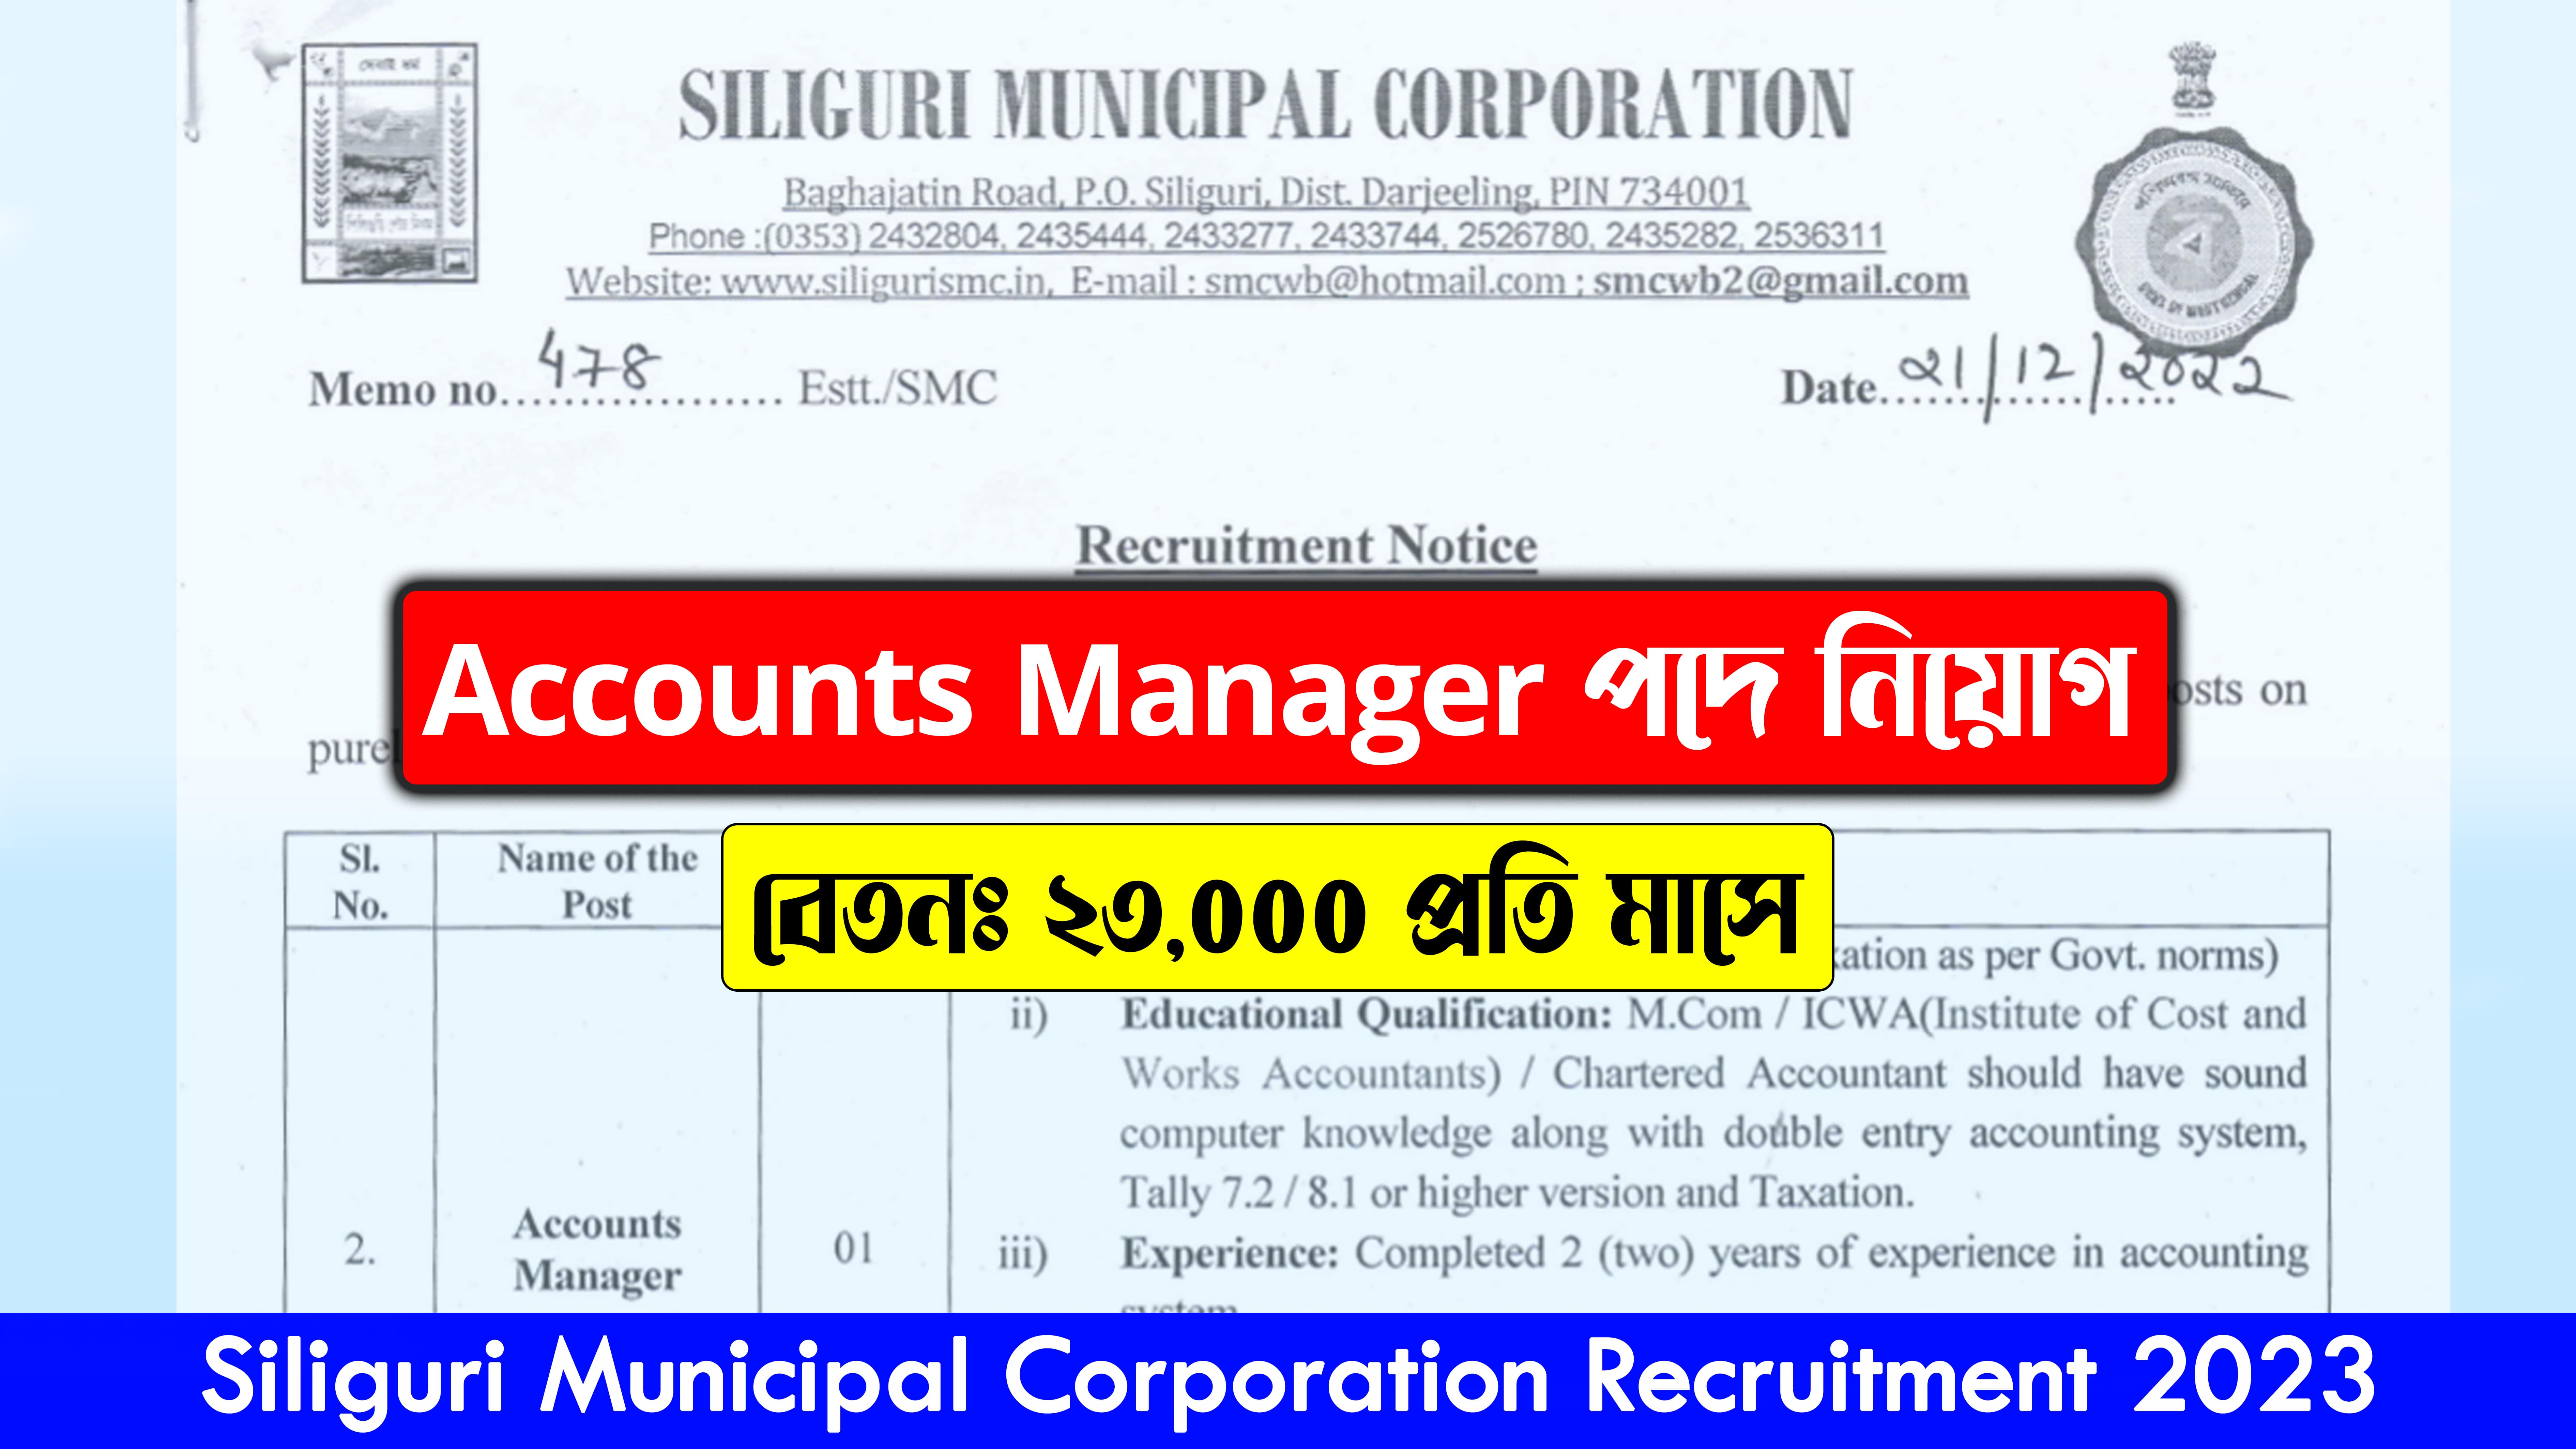 Siliguri Municipal Corporation recruitment 2023